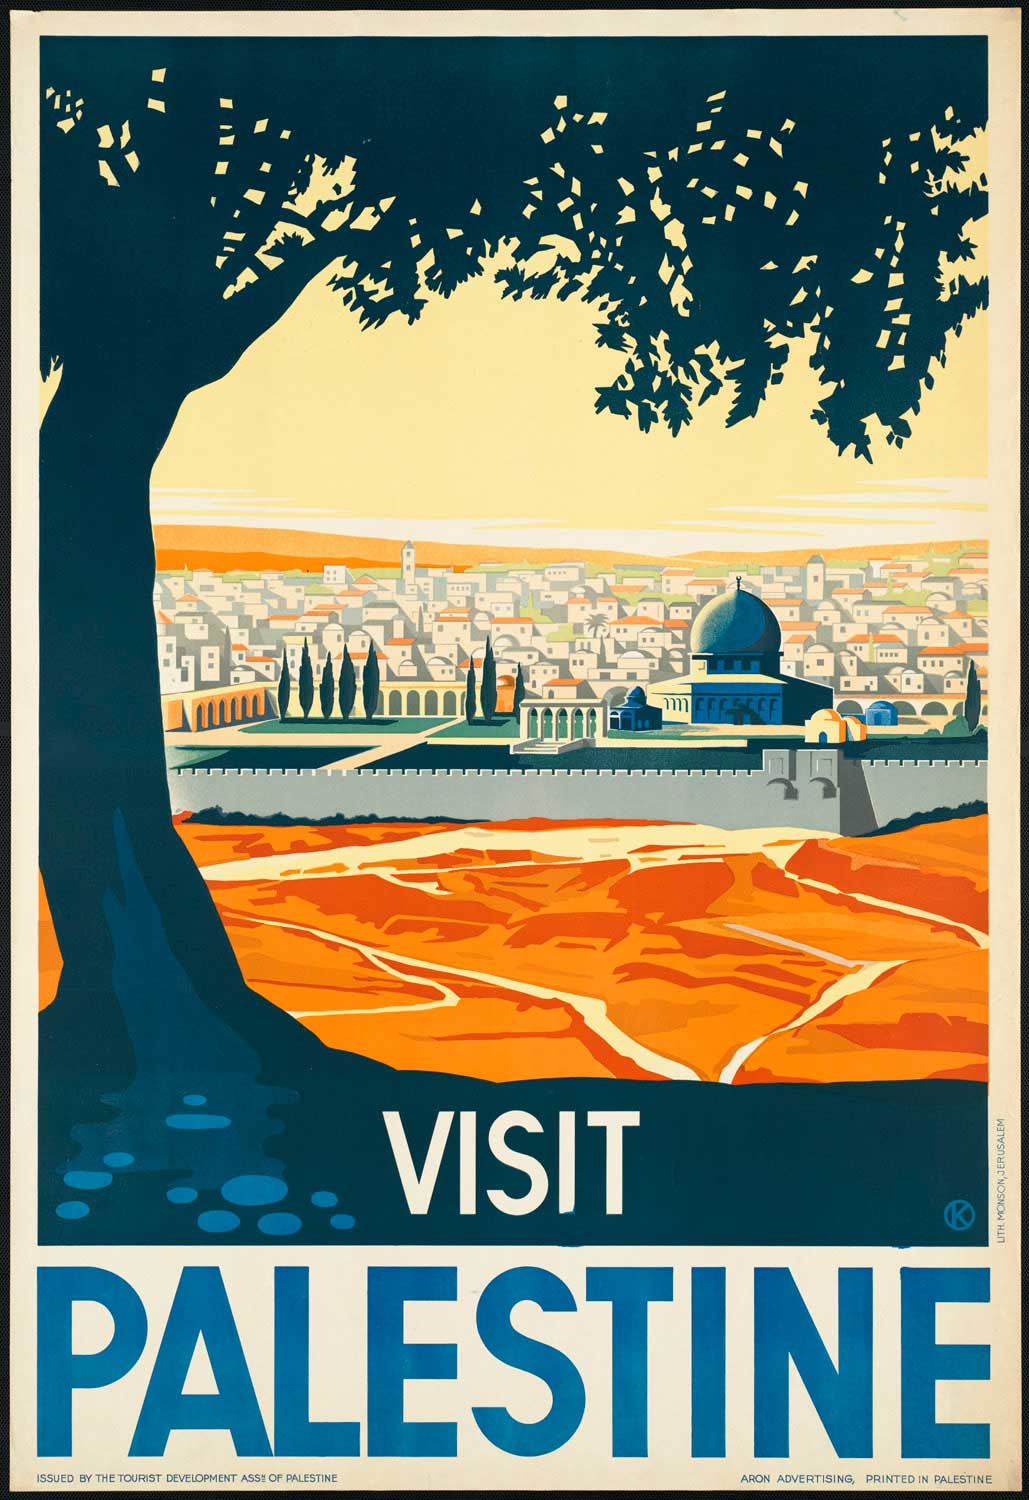 Vintage Travel Poster Wallpapers - Top Free Vintage Travel Poster